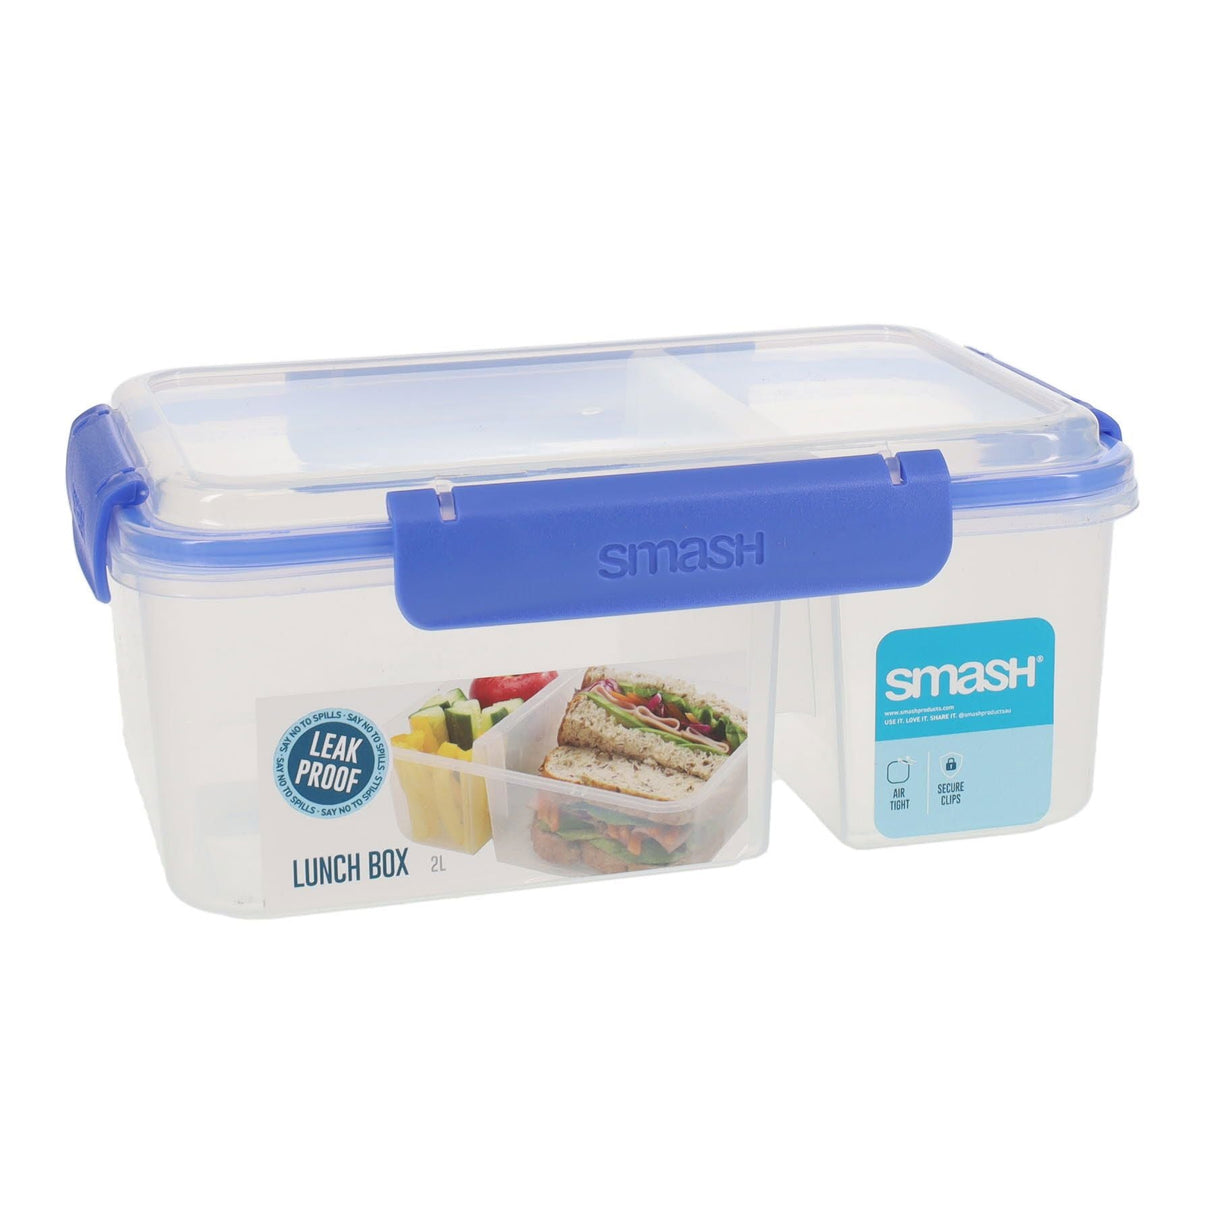 Smash Leakproof Divided Lunch Box - 2L - Blue | Stationery Shop UK